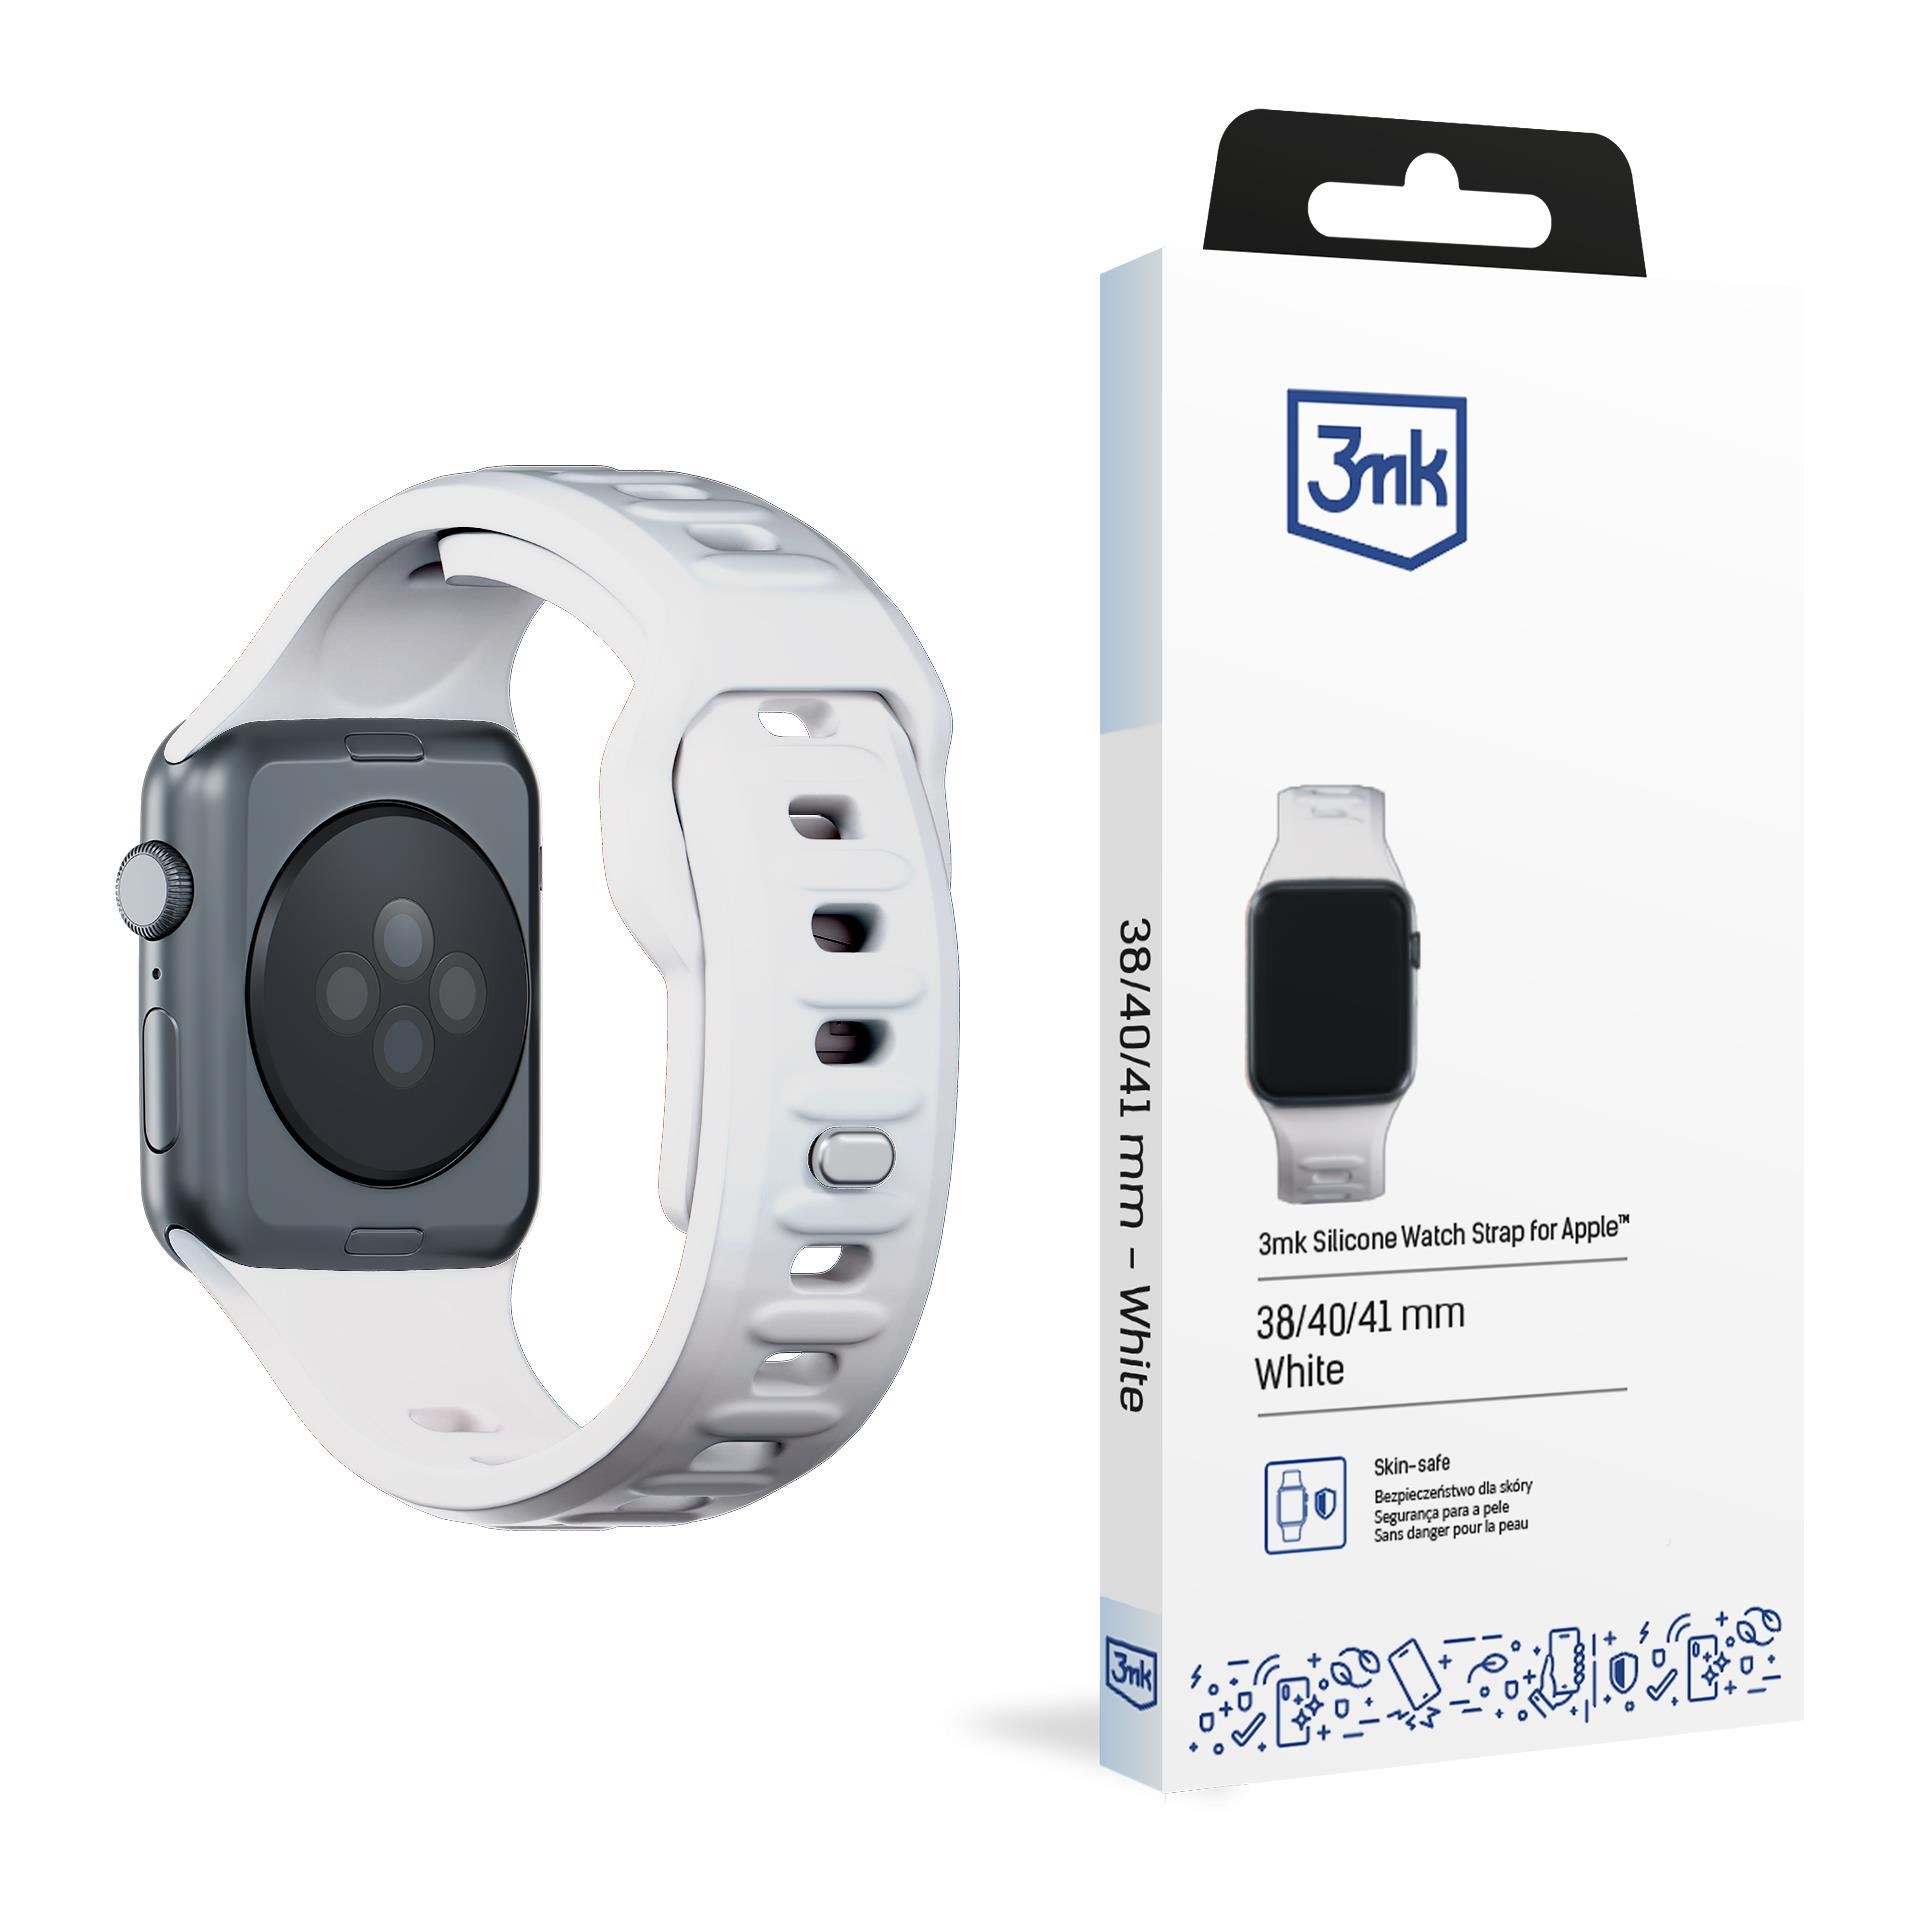 3mk Silicone Watch Strap pro Apple 38 40 41 mm White0 